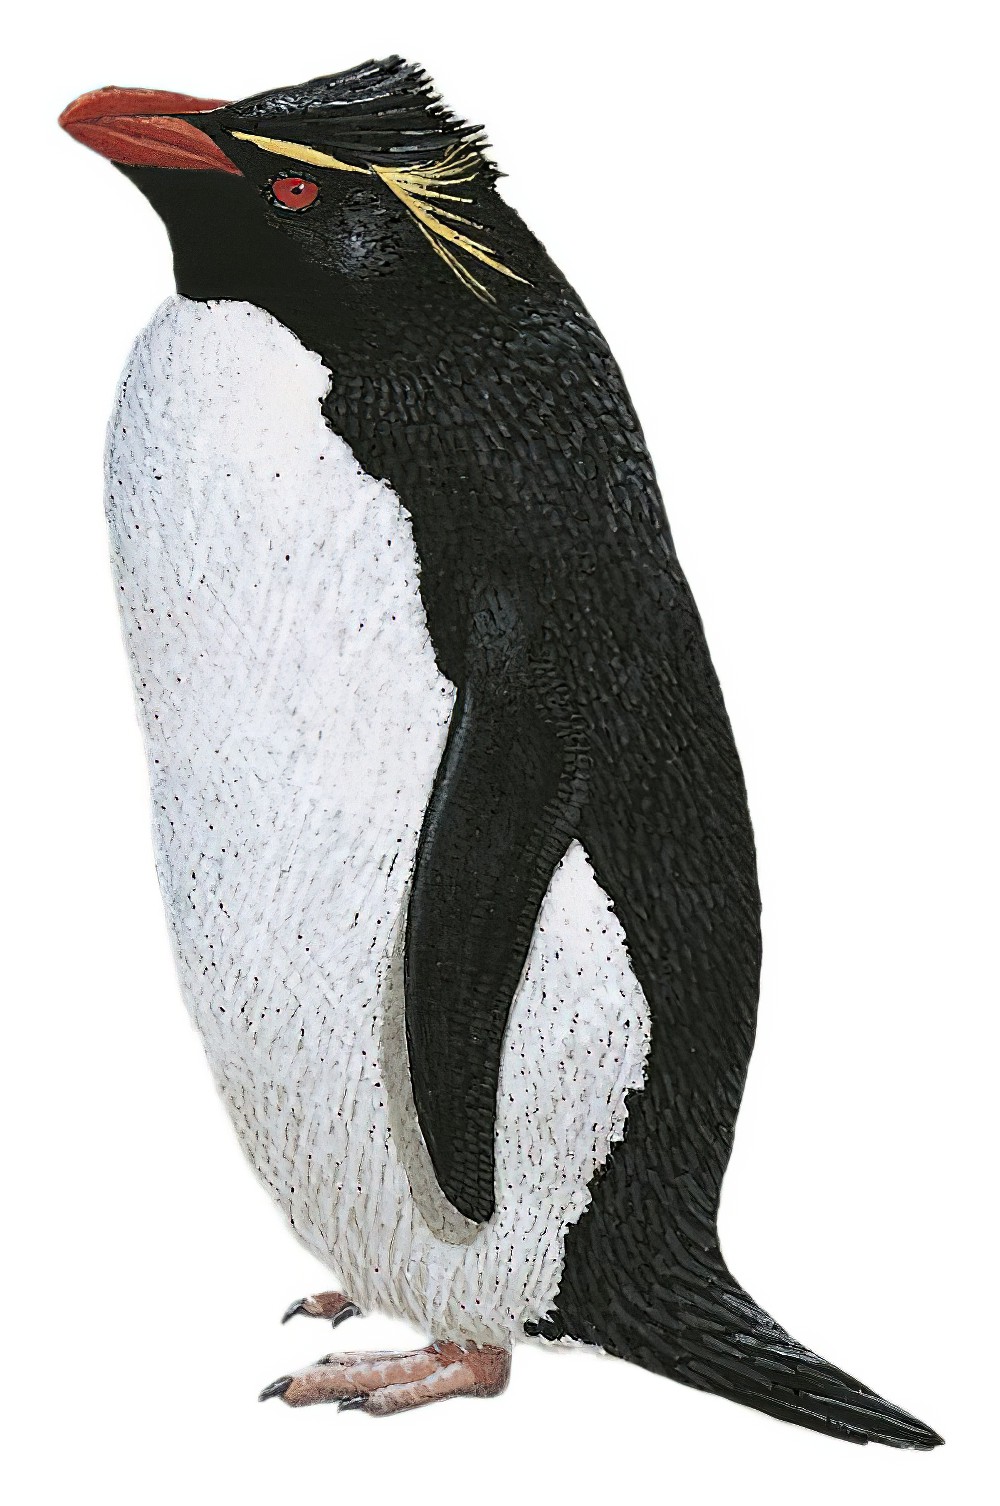 Southern Rockhopper Penguin / Eudyptes chrysocome